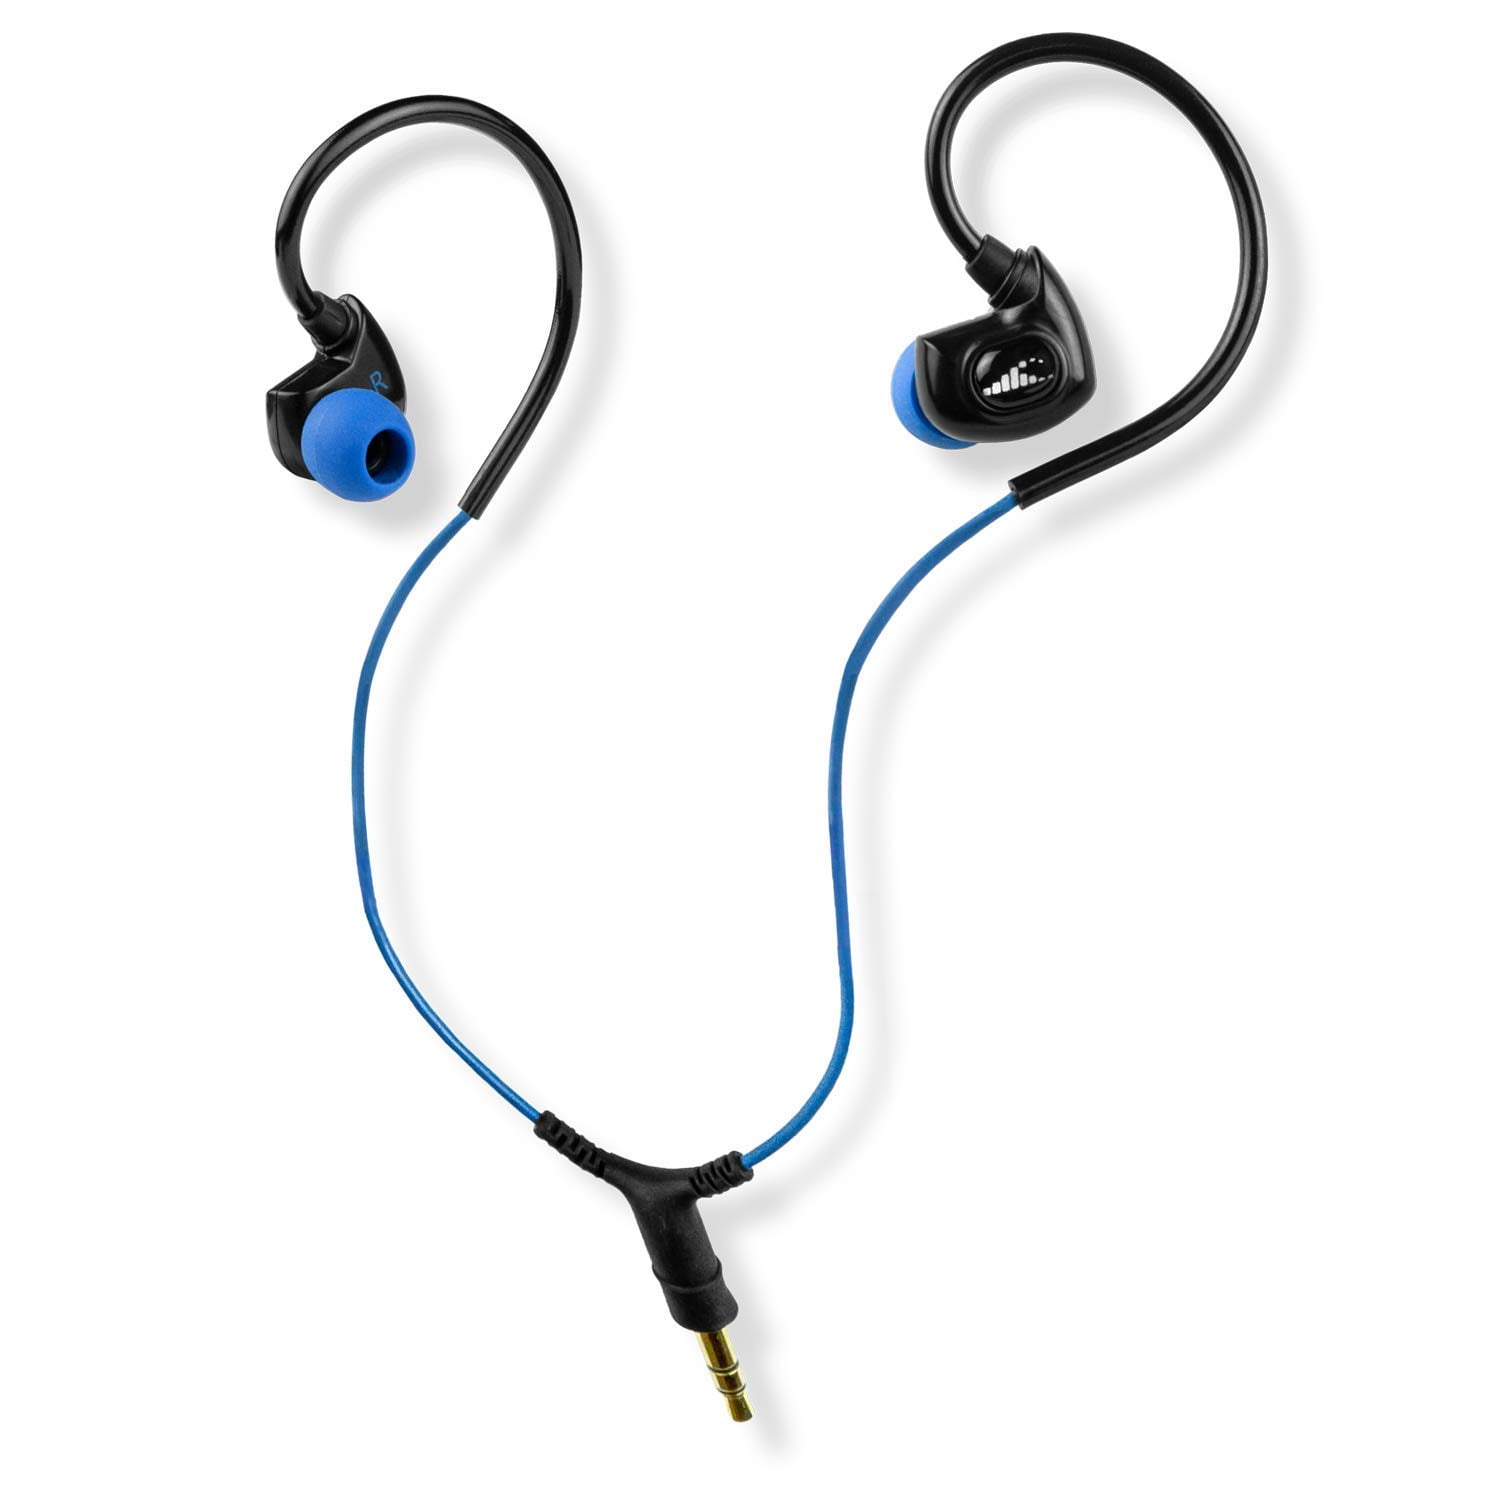 Waterproof Headphones for Swimming,IPX8 Waterproof 8GB MP3 Player 